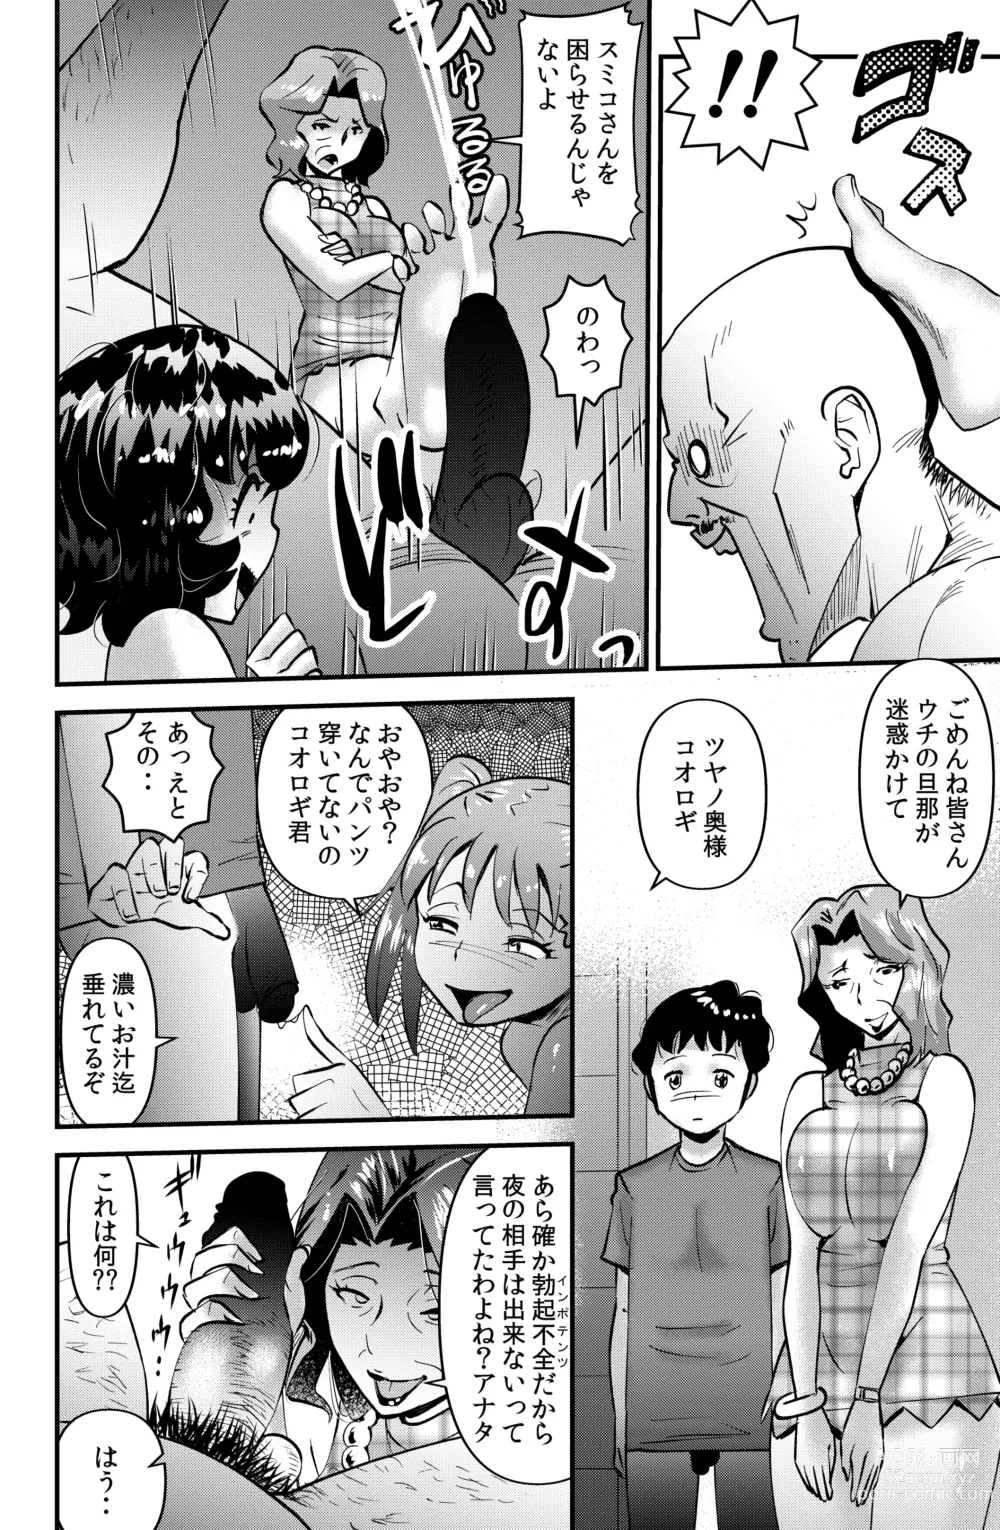 Page 22 of doujinshi Kazoku Camp 2